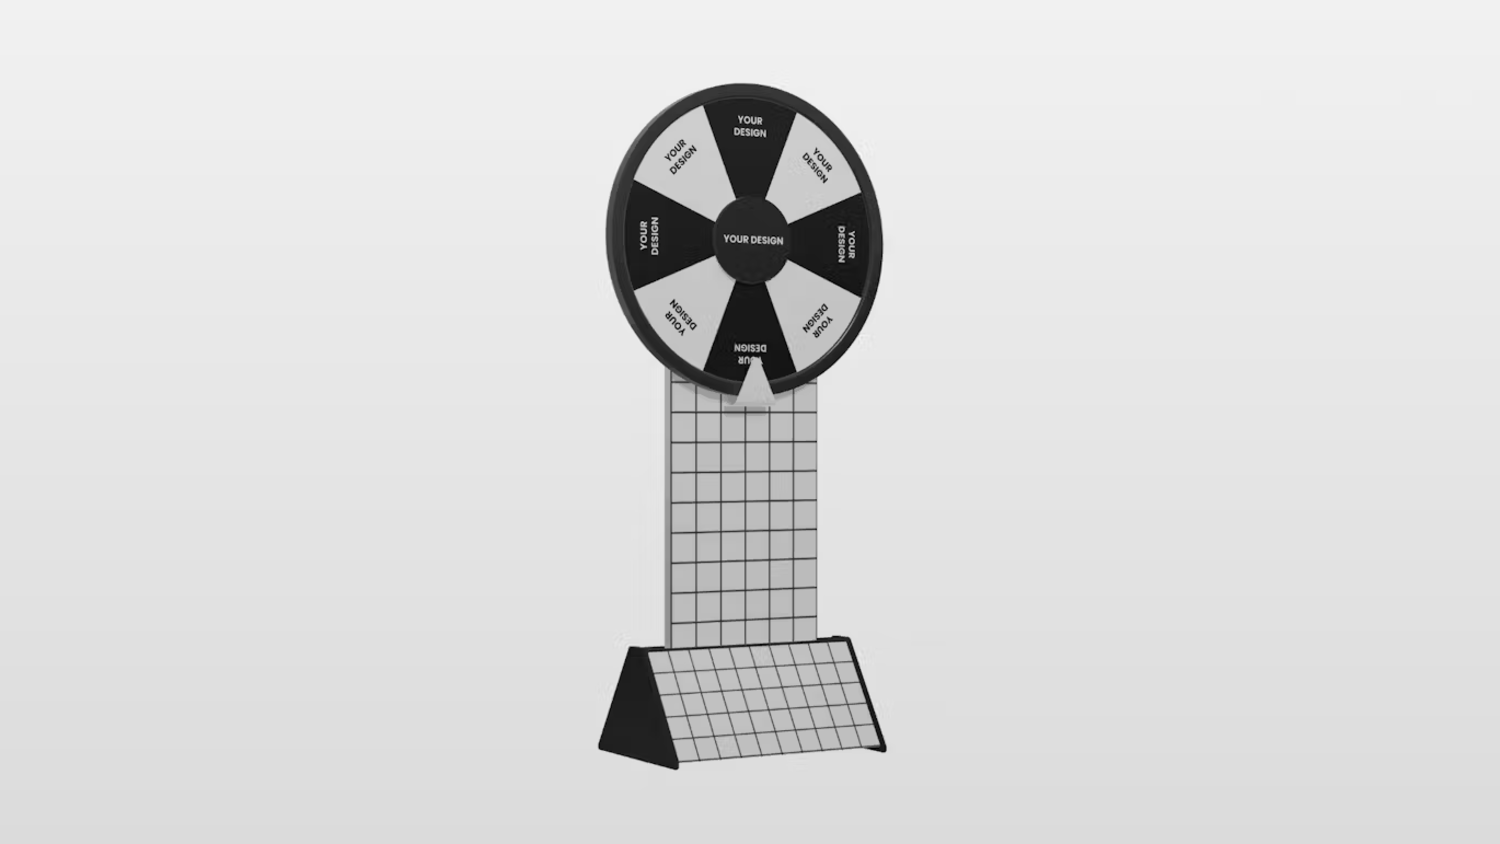 5824 逼真旋转模型展示支架样机-Wheel Spinner Stand Mockup